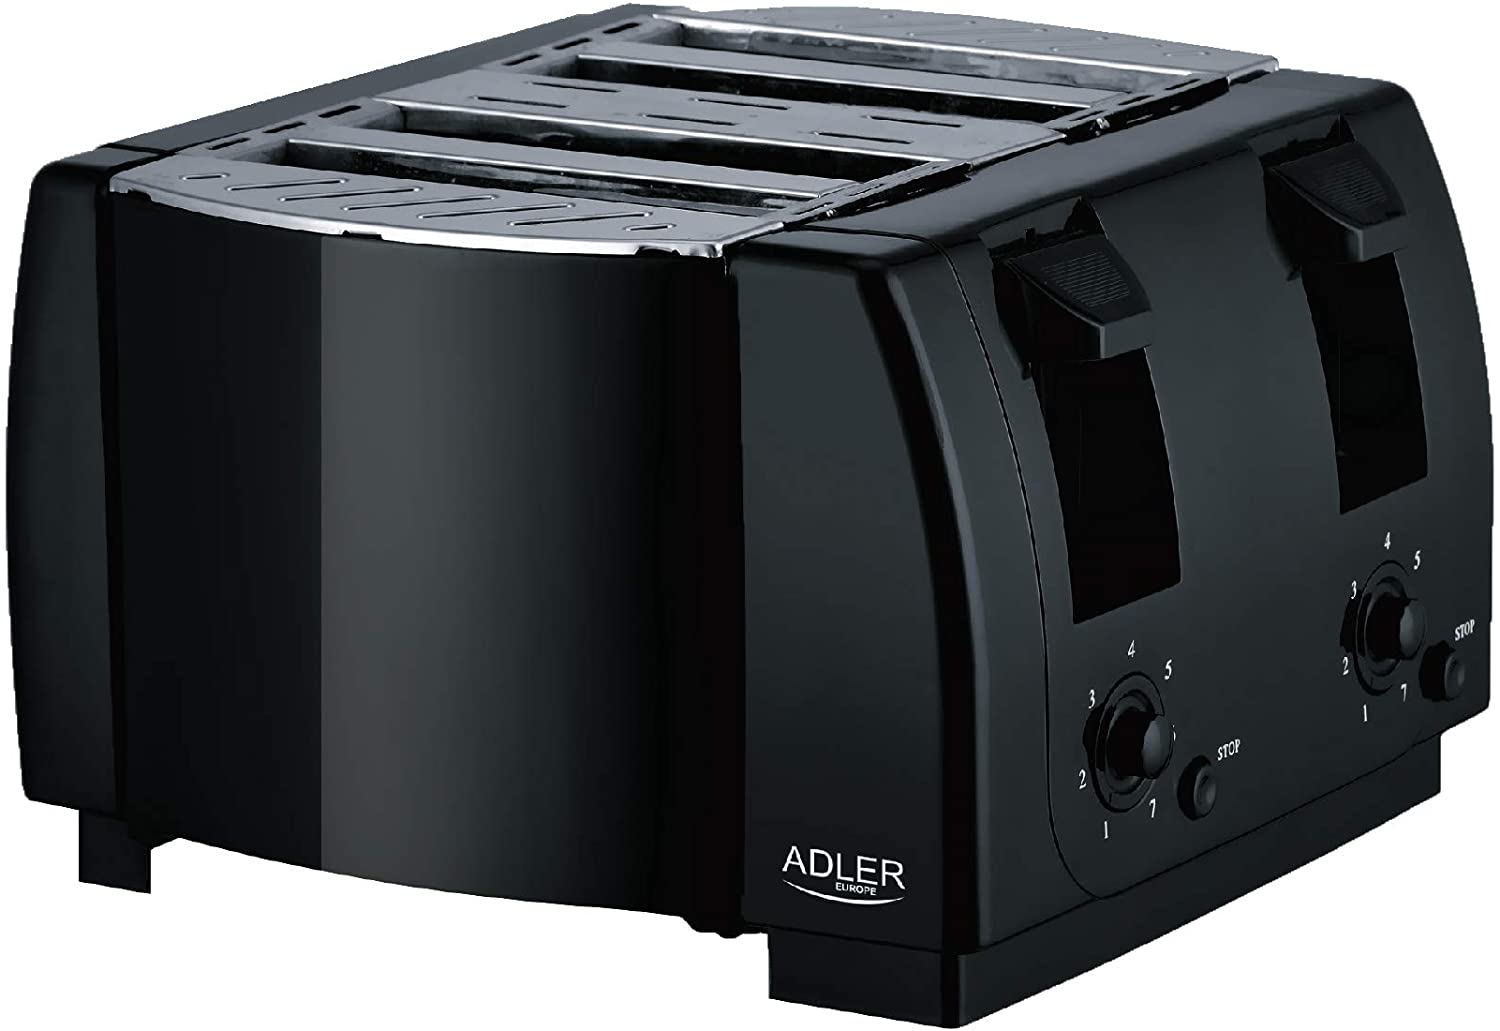 Adler Toaster 4 Slice 1300W Black